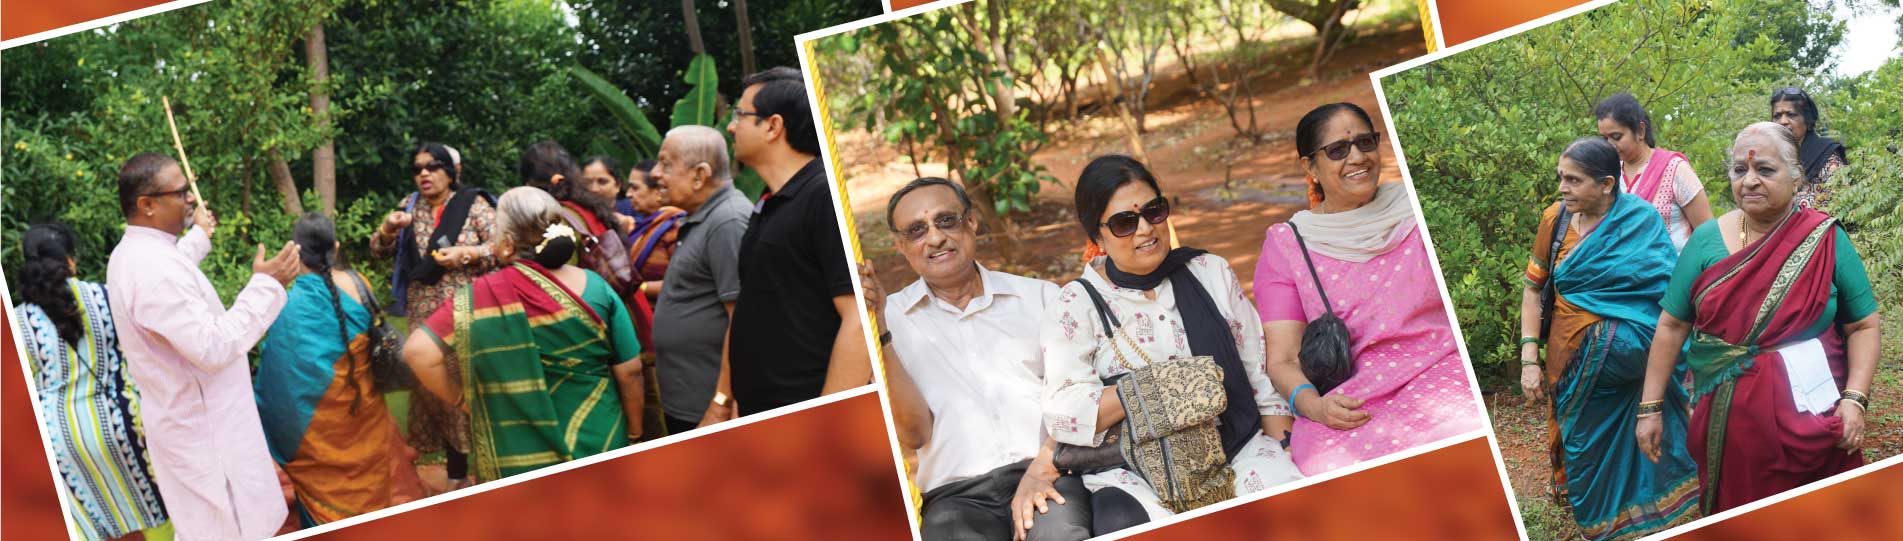 Best Places in Bangalore for Senior Citizens